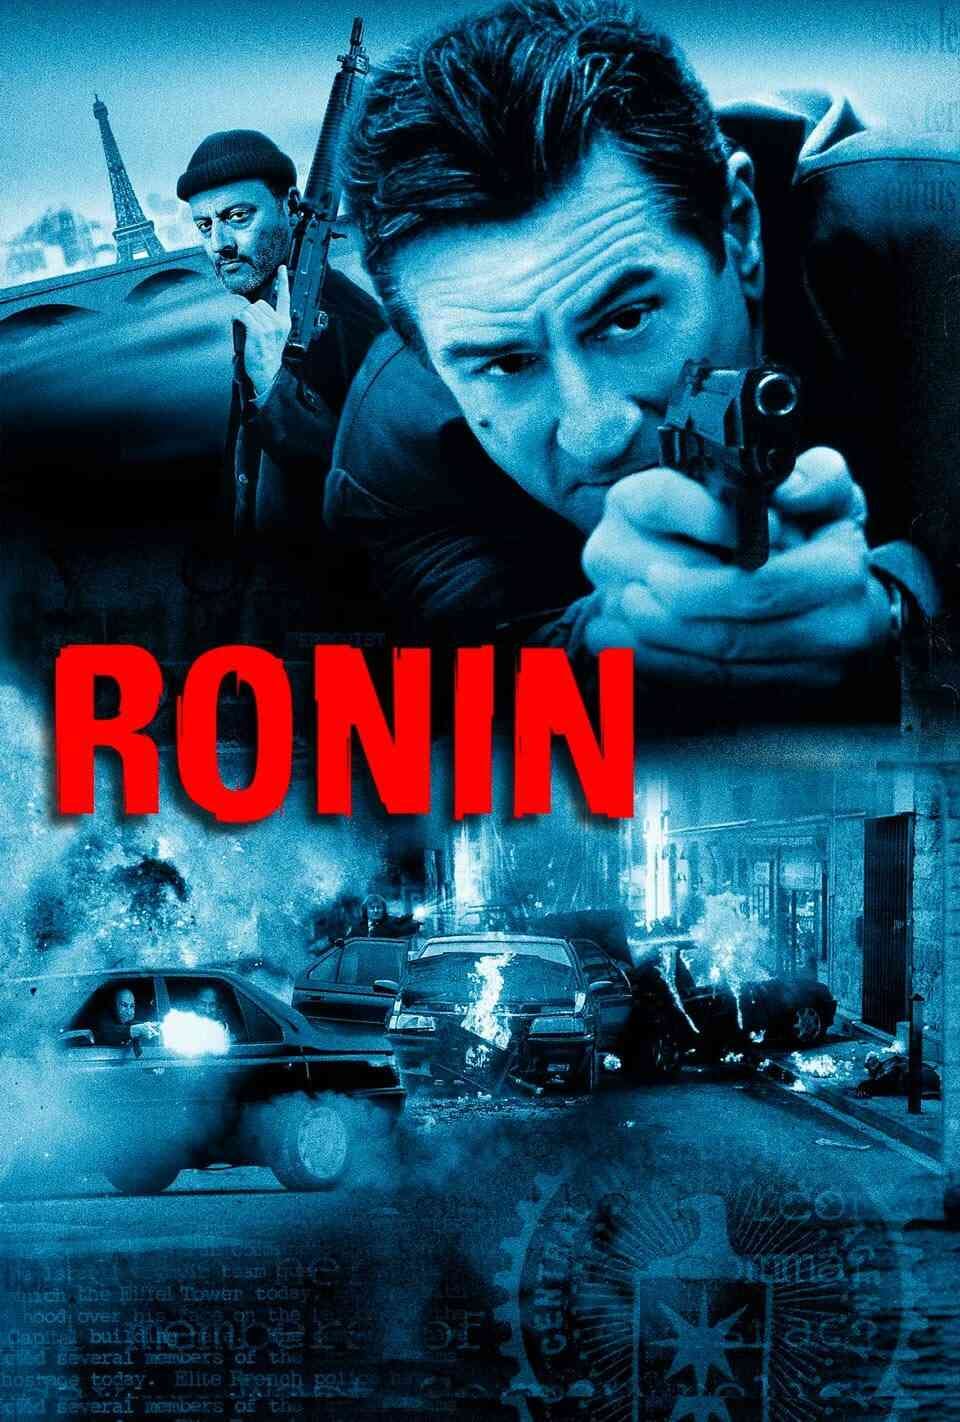 Read Ronin screenplay (poster)